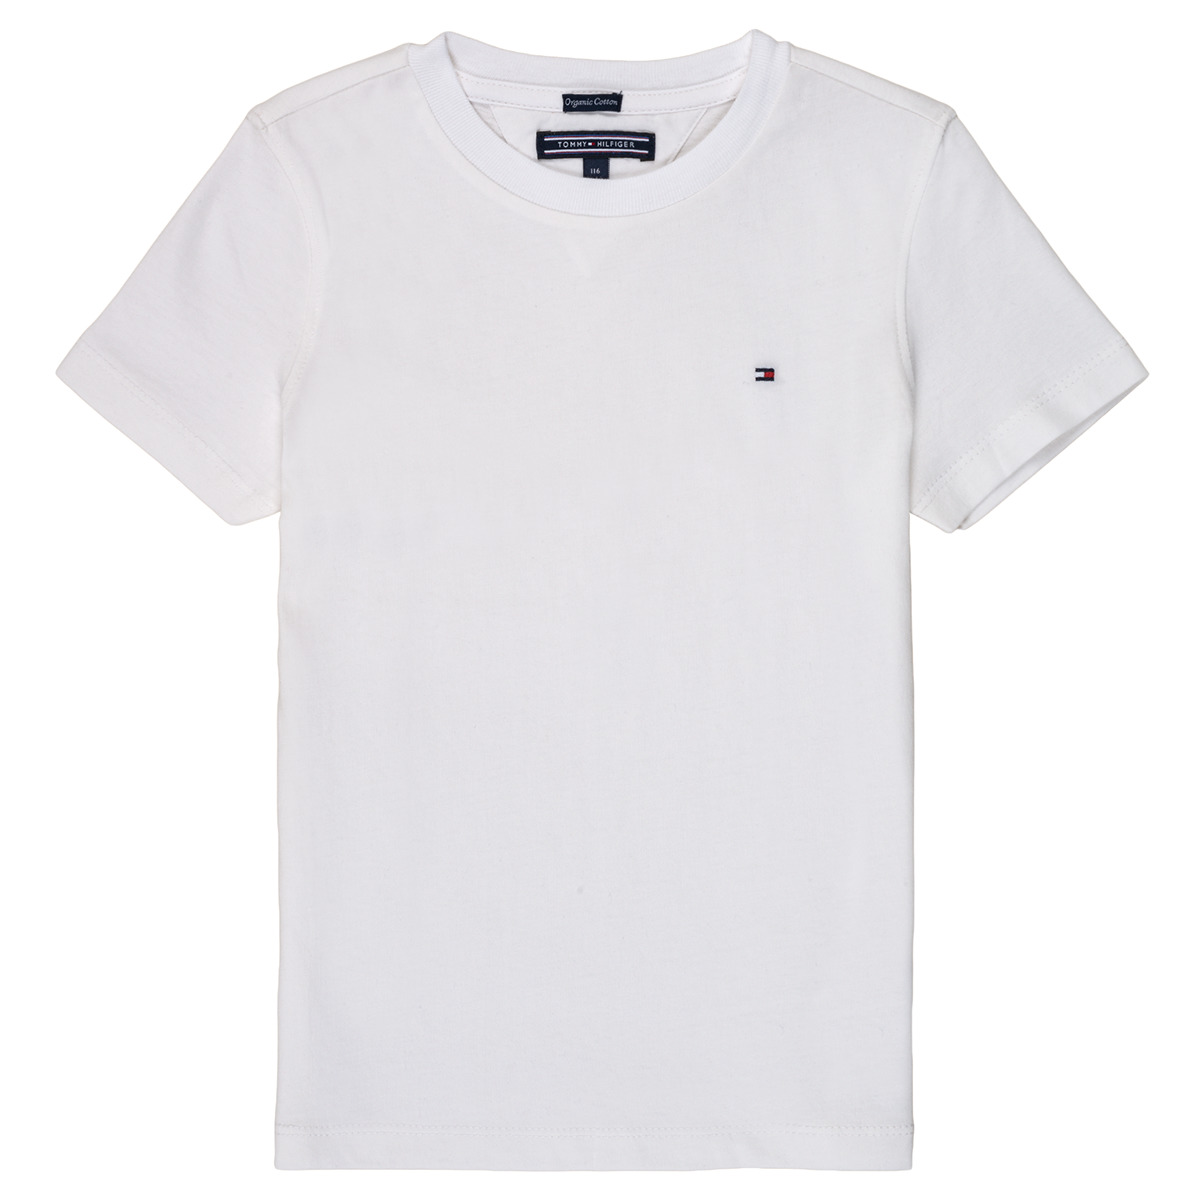 Abbigliamento Bambino T-shirt maniche corte Tommy Hilfiger KB0KB04140 Bianco